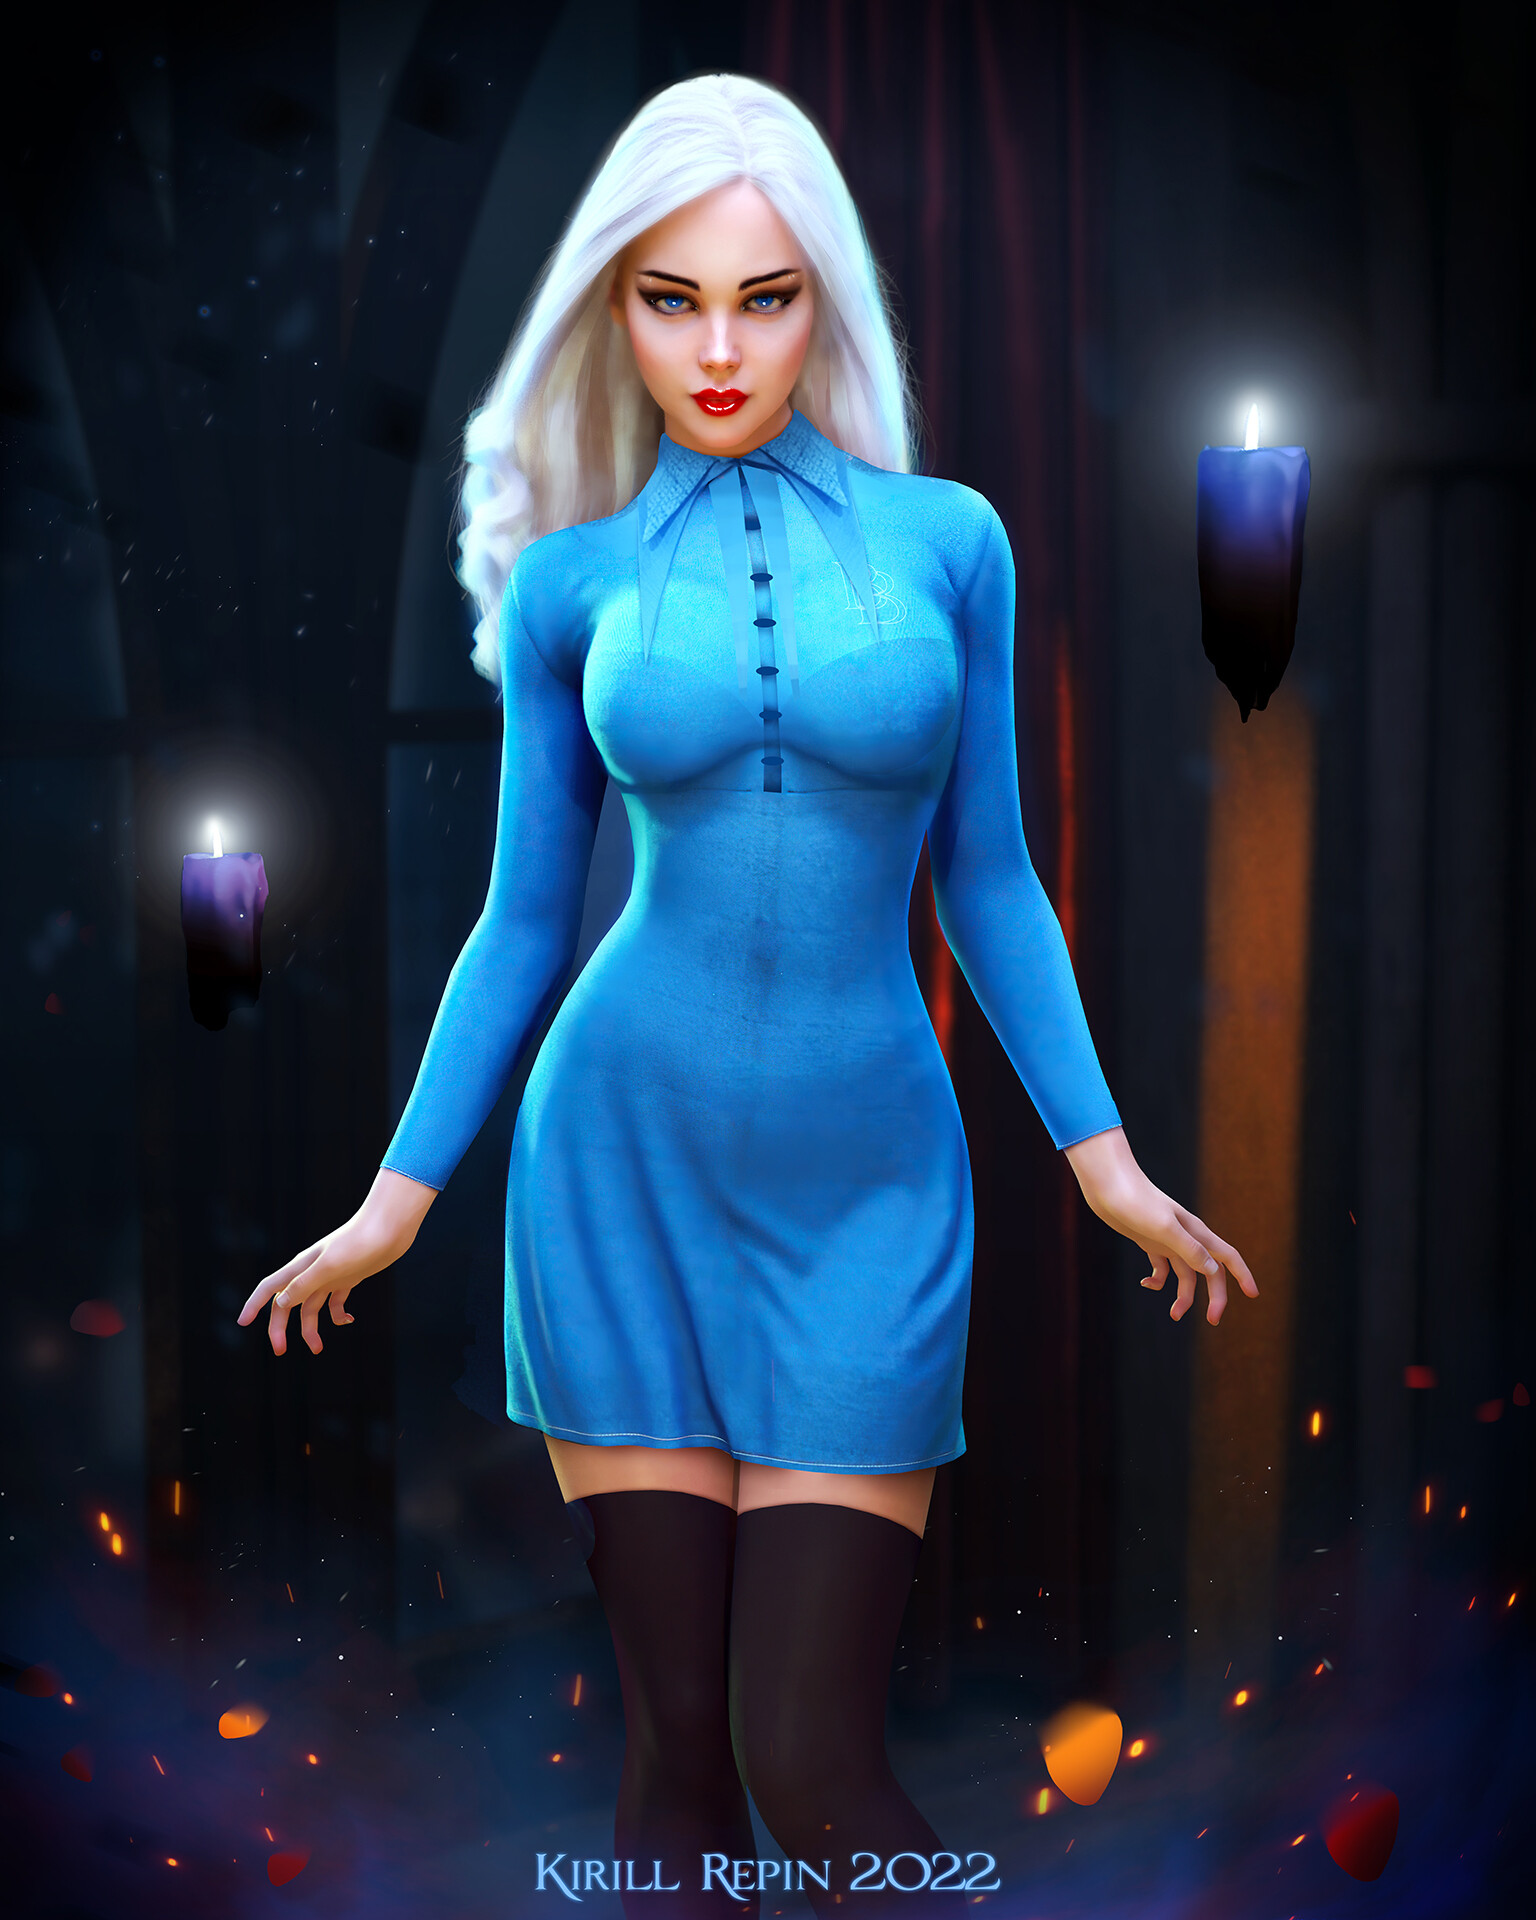 General 1536x1920 Kirill Repin women blonde Fleur Delacour (Harry Potter) long hair stockings thigh-highs dress blue clothing dark indoors